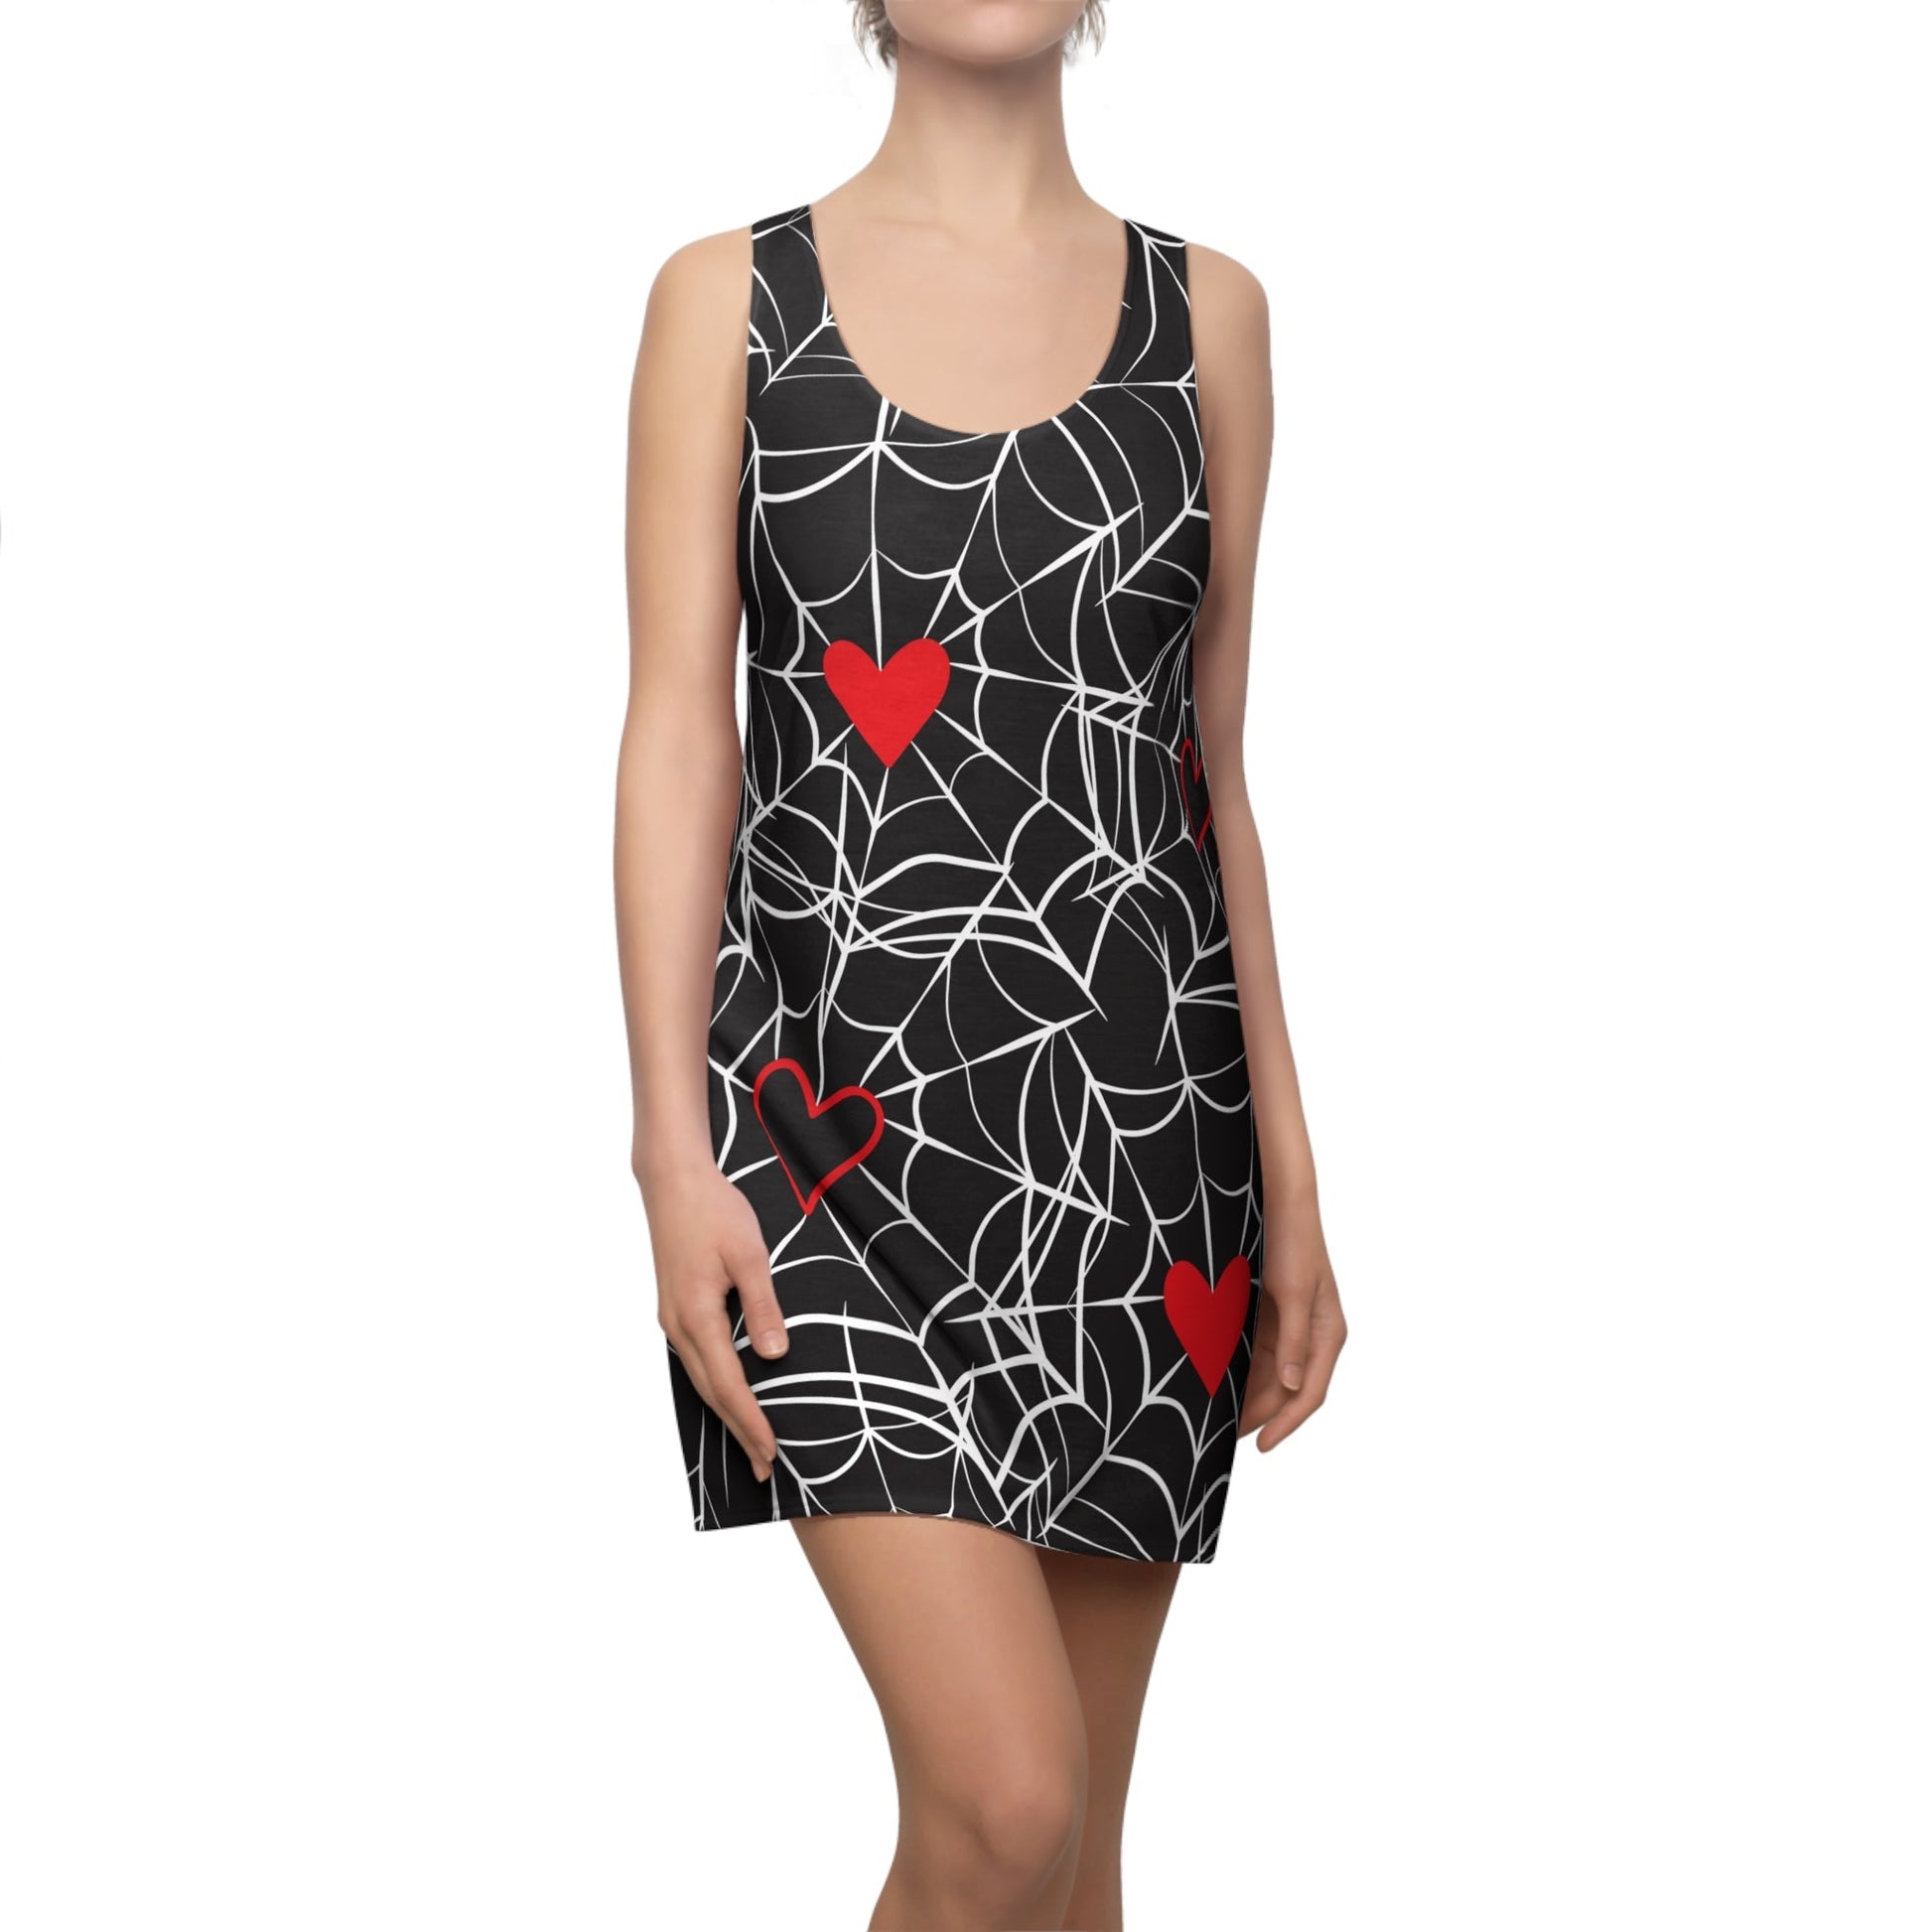 All Over Prints - Women's SpiderWebs Cut & Sew Racerback Dress